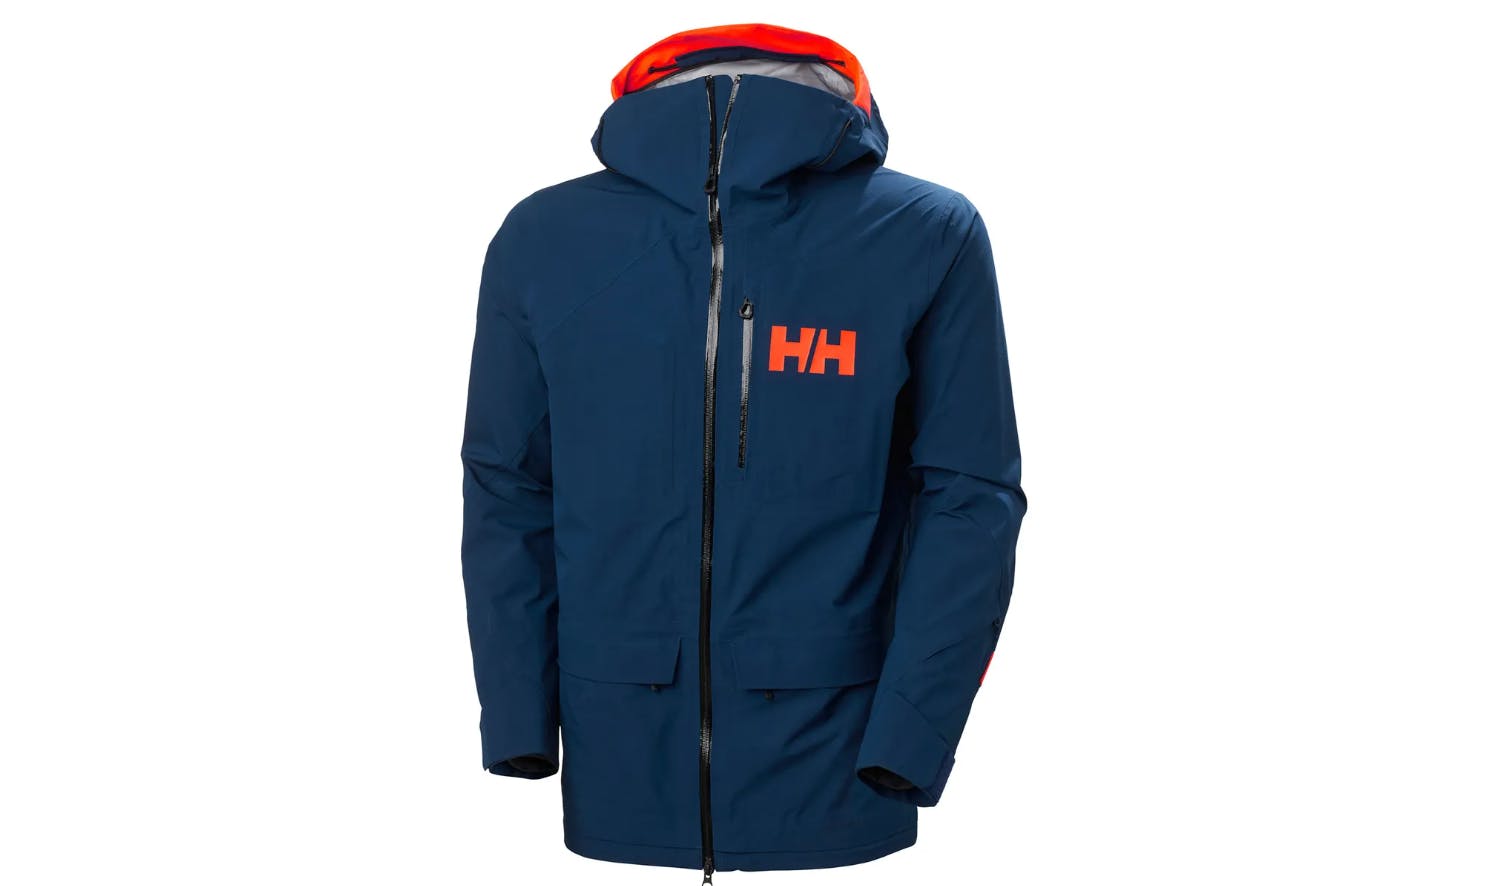 The Helly Hansen Men’s Ridge Infinity Shell Jacket.